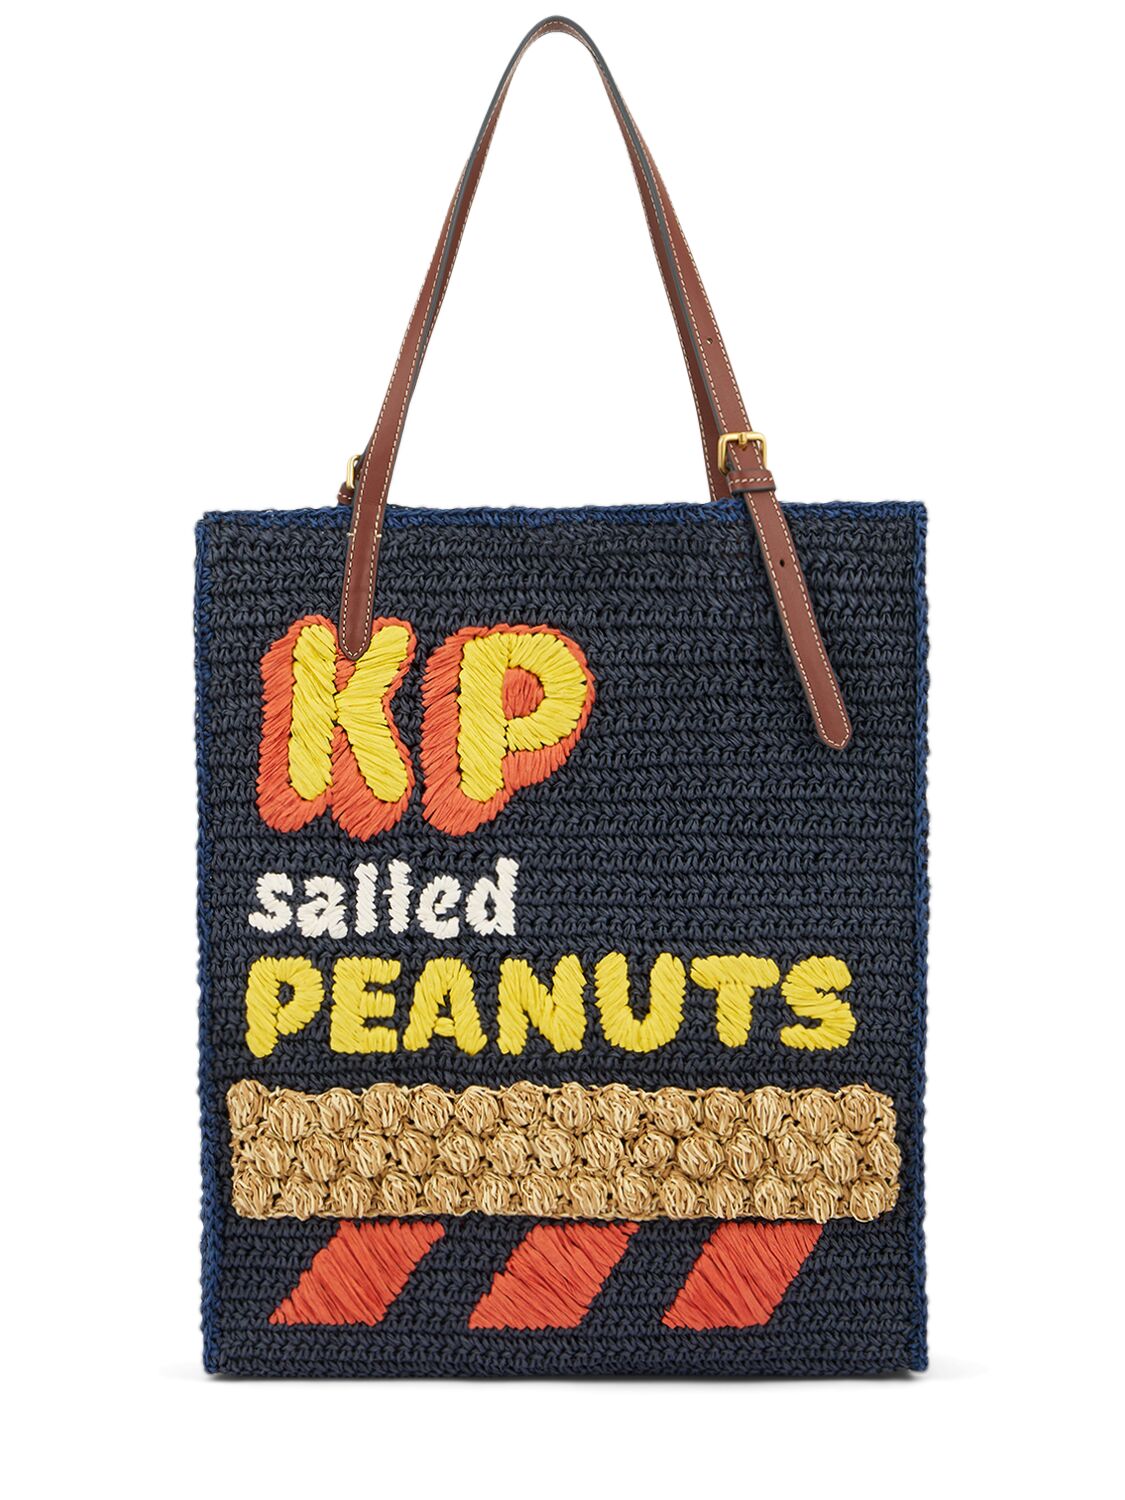 Kp Peanuts Raffia Tote Bag